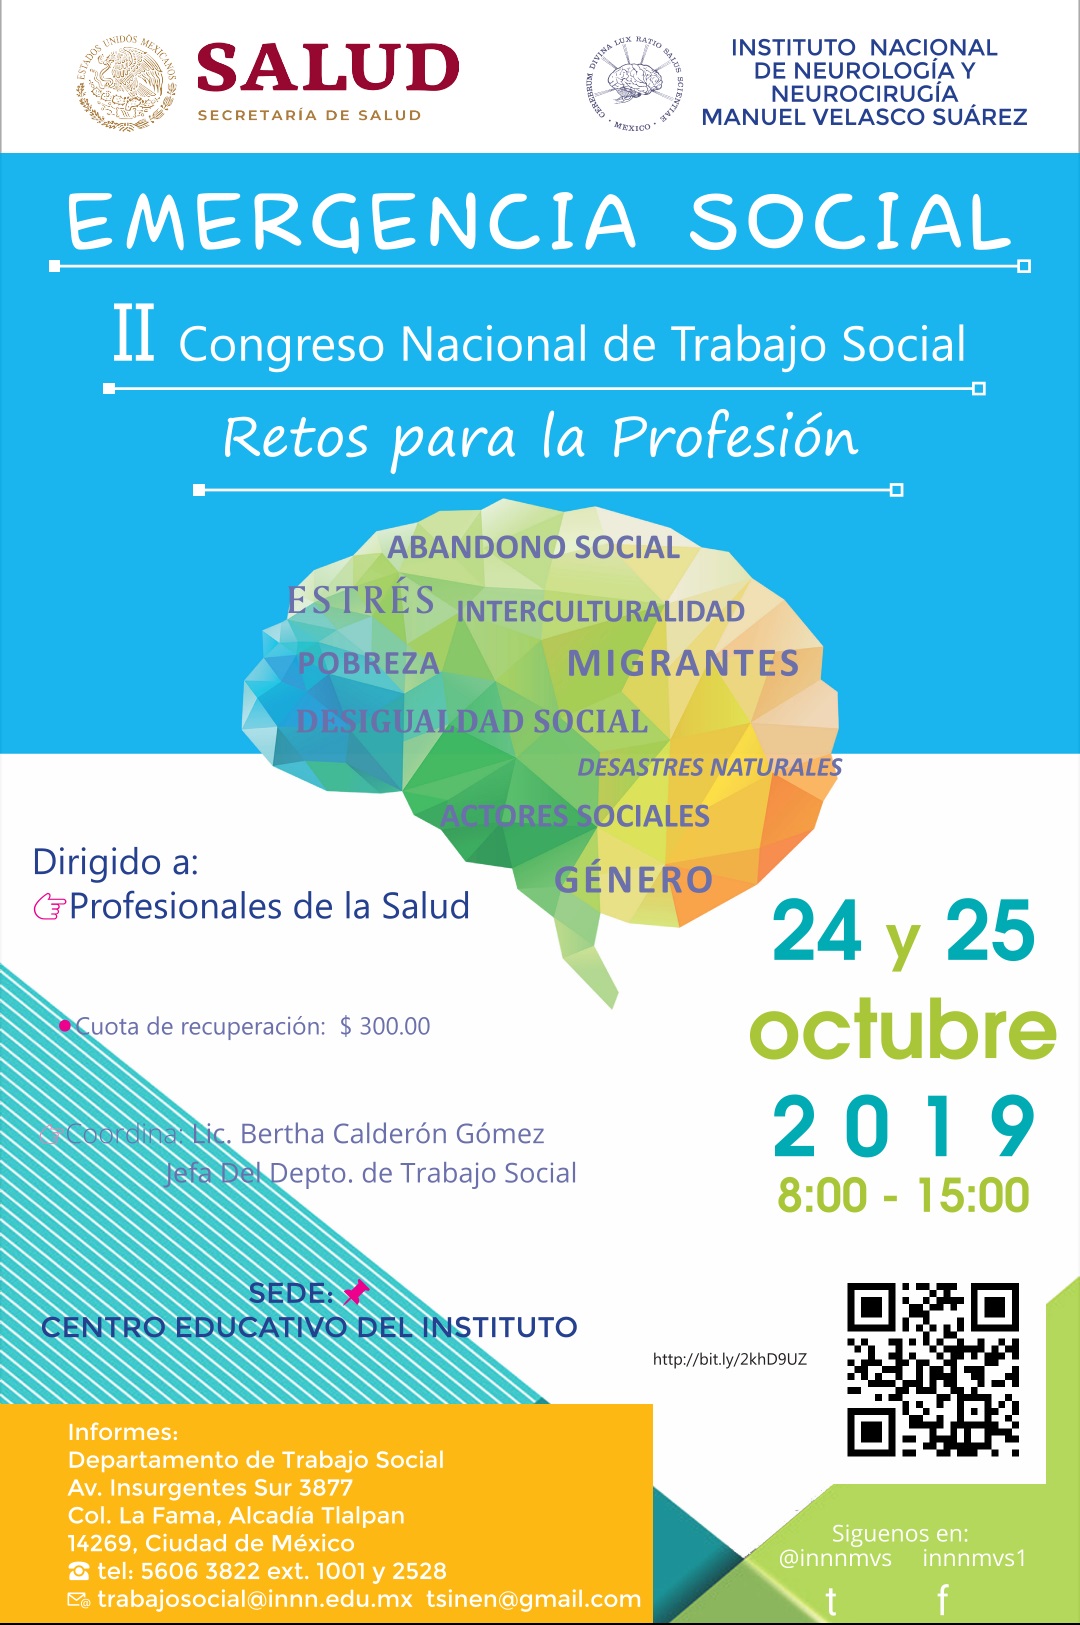 SEGUNDO CONGRESO DE TRABAJO SOCIAL "EMERGENCIA SOCIAL : RETOS PARA LA PROFESIÓN"